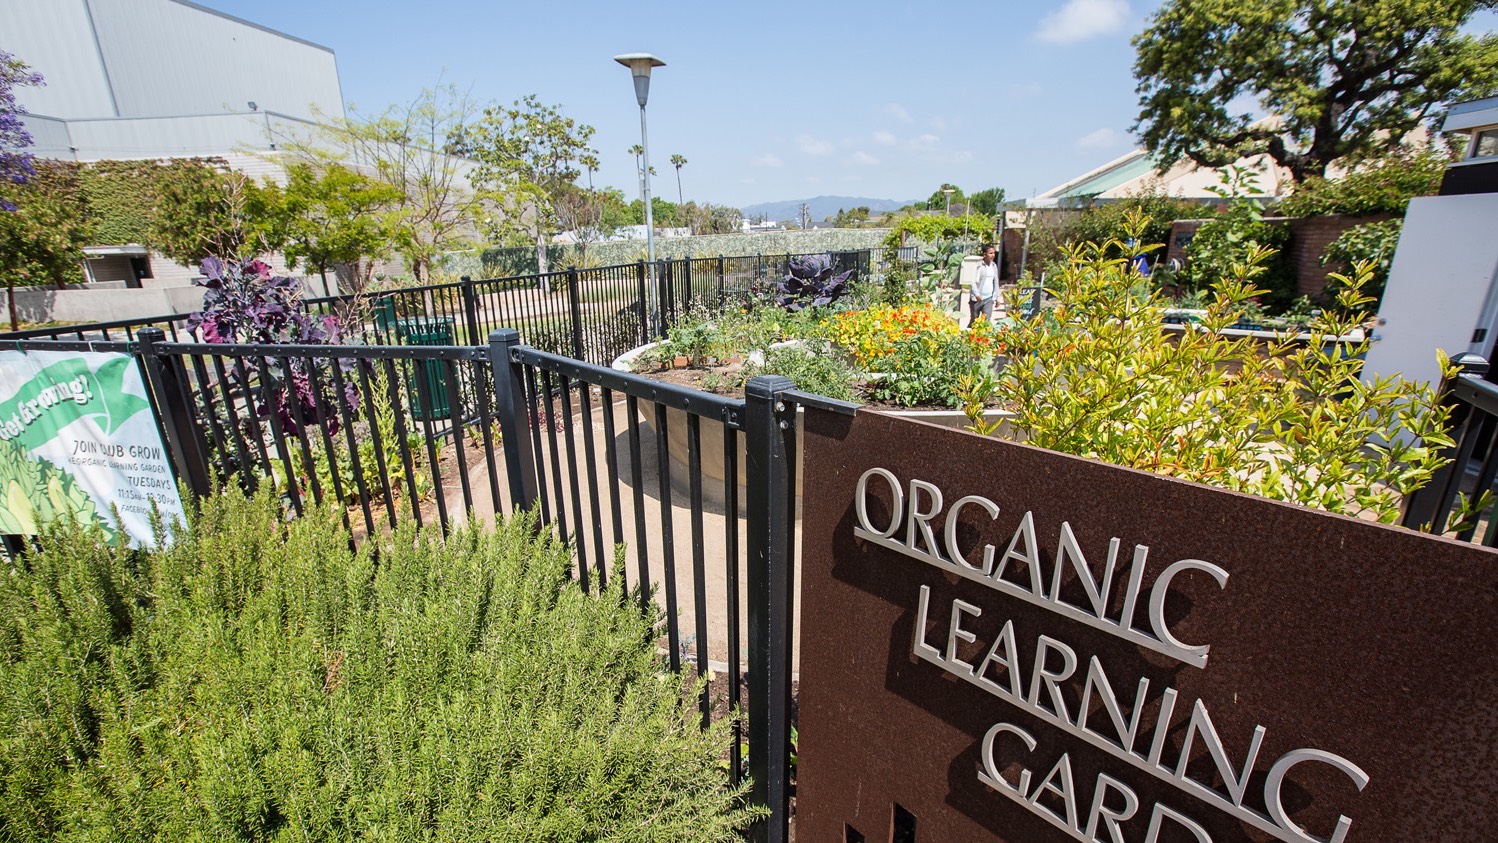 Organic Learning Garden